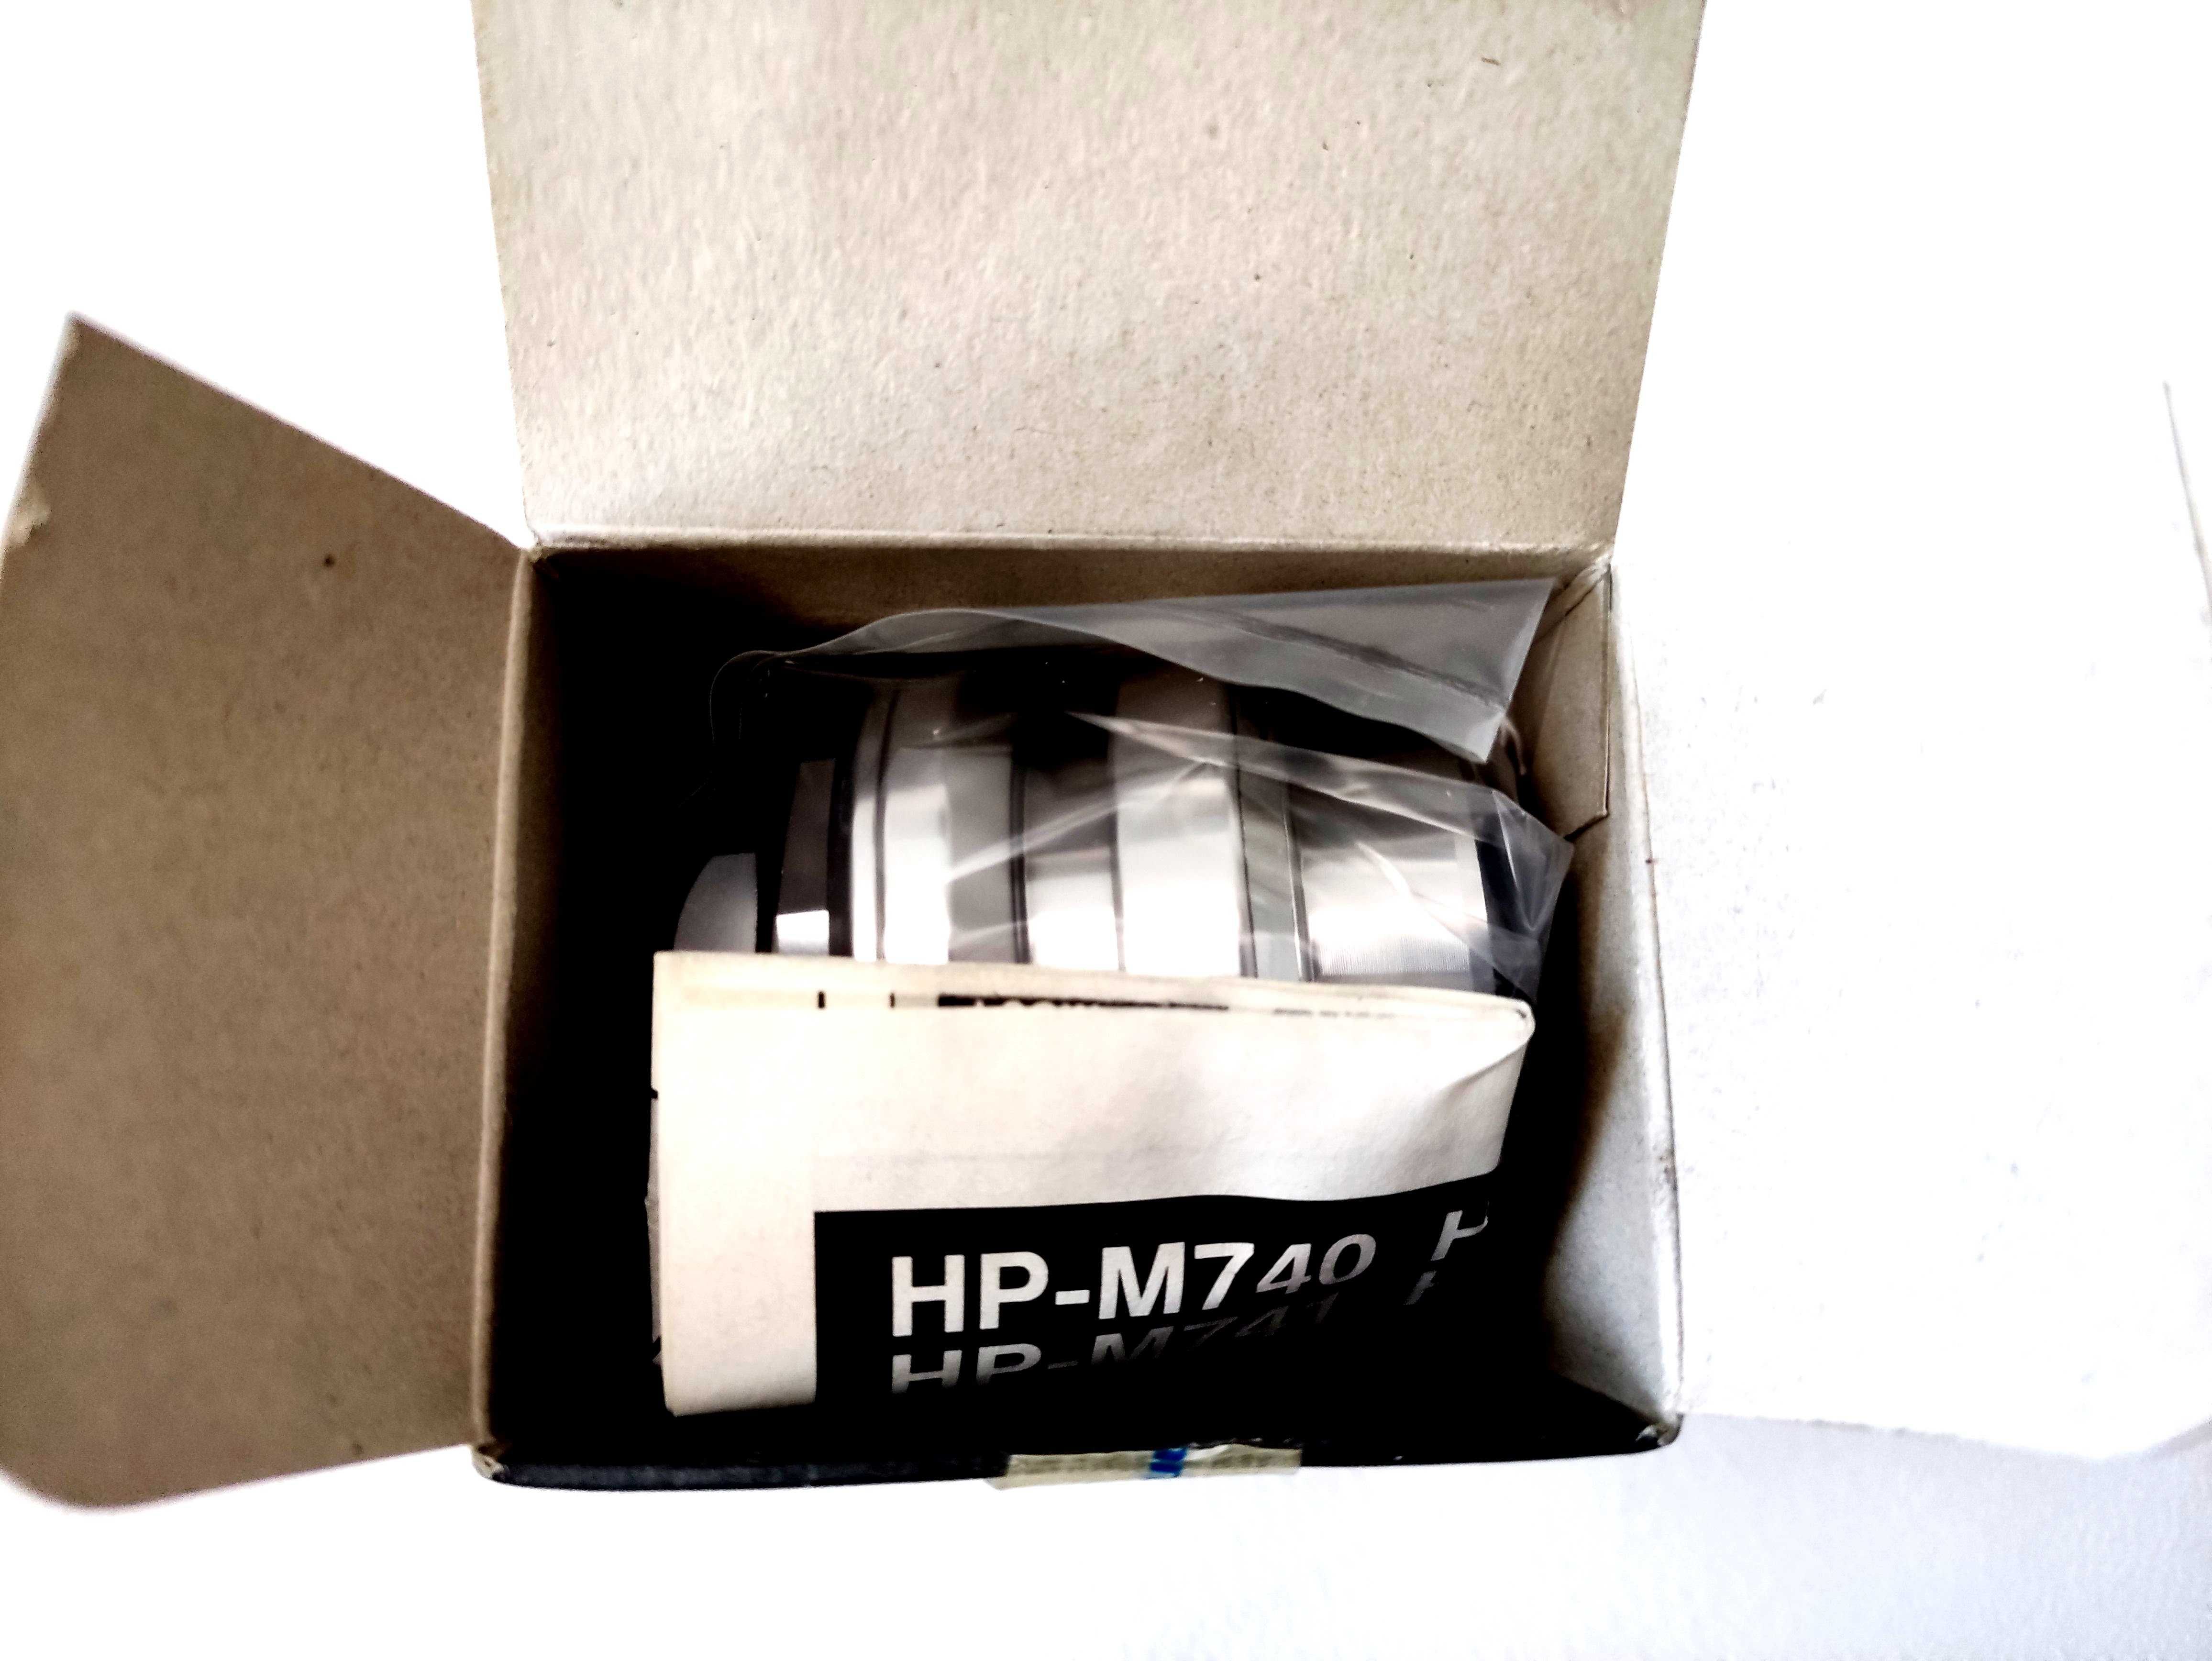 NOWE Stery Shimano XT XT HP-M741 1 i 1/8'' NOS BOX Kraków